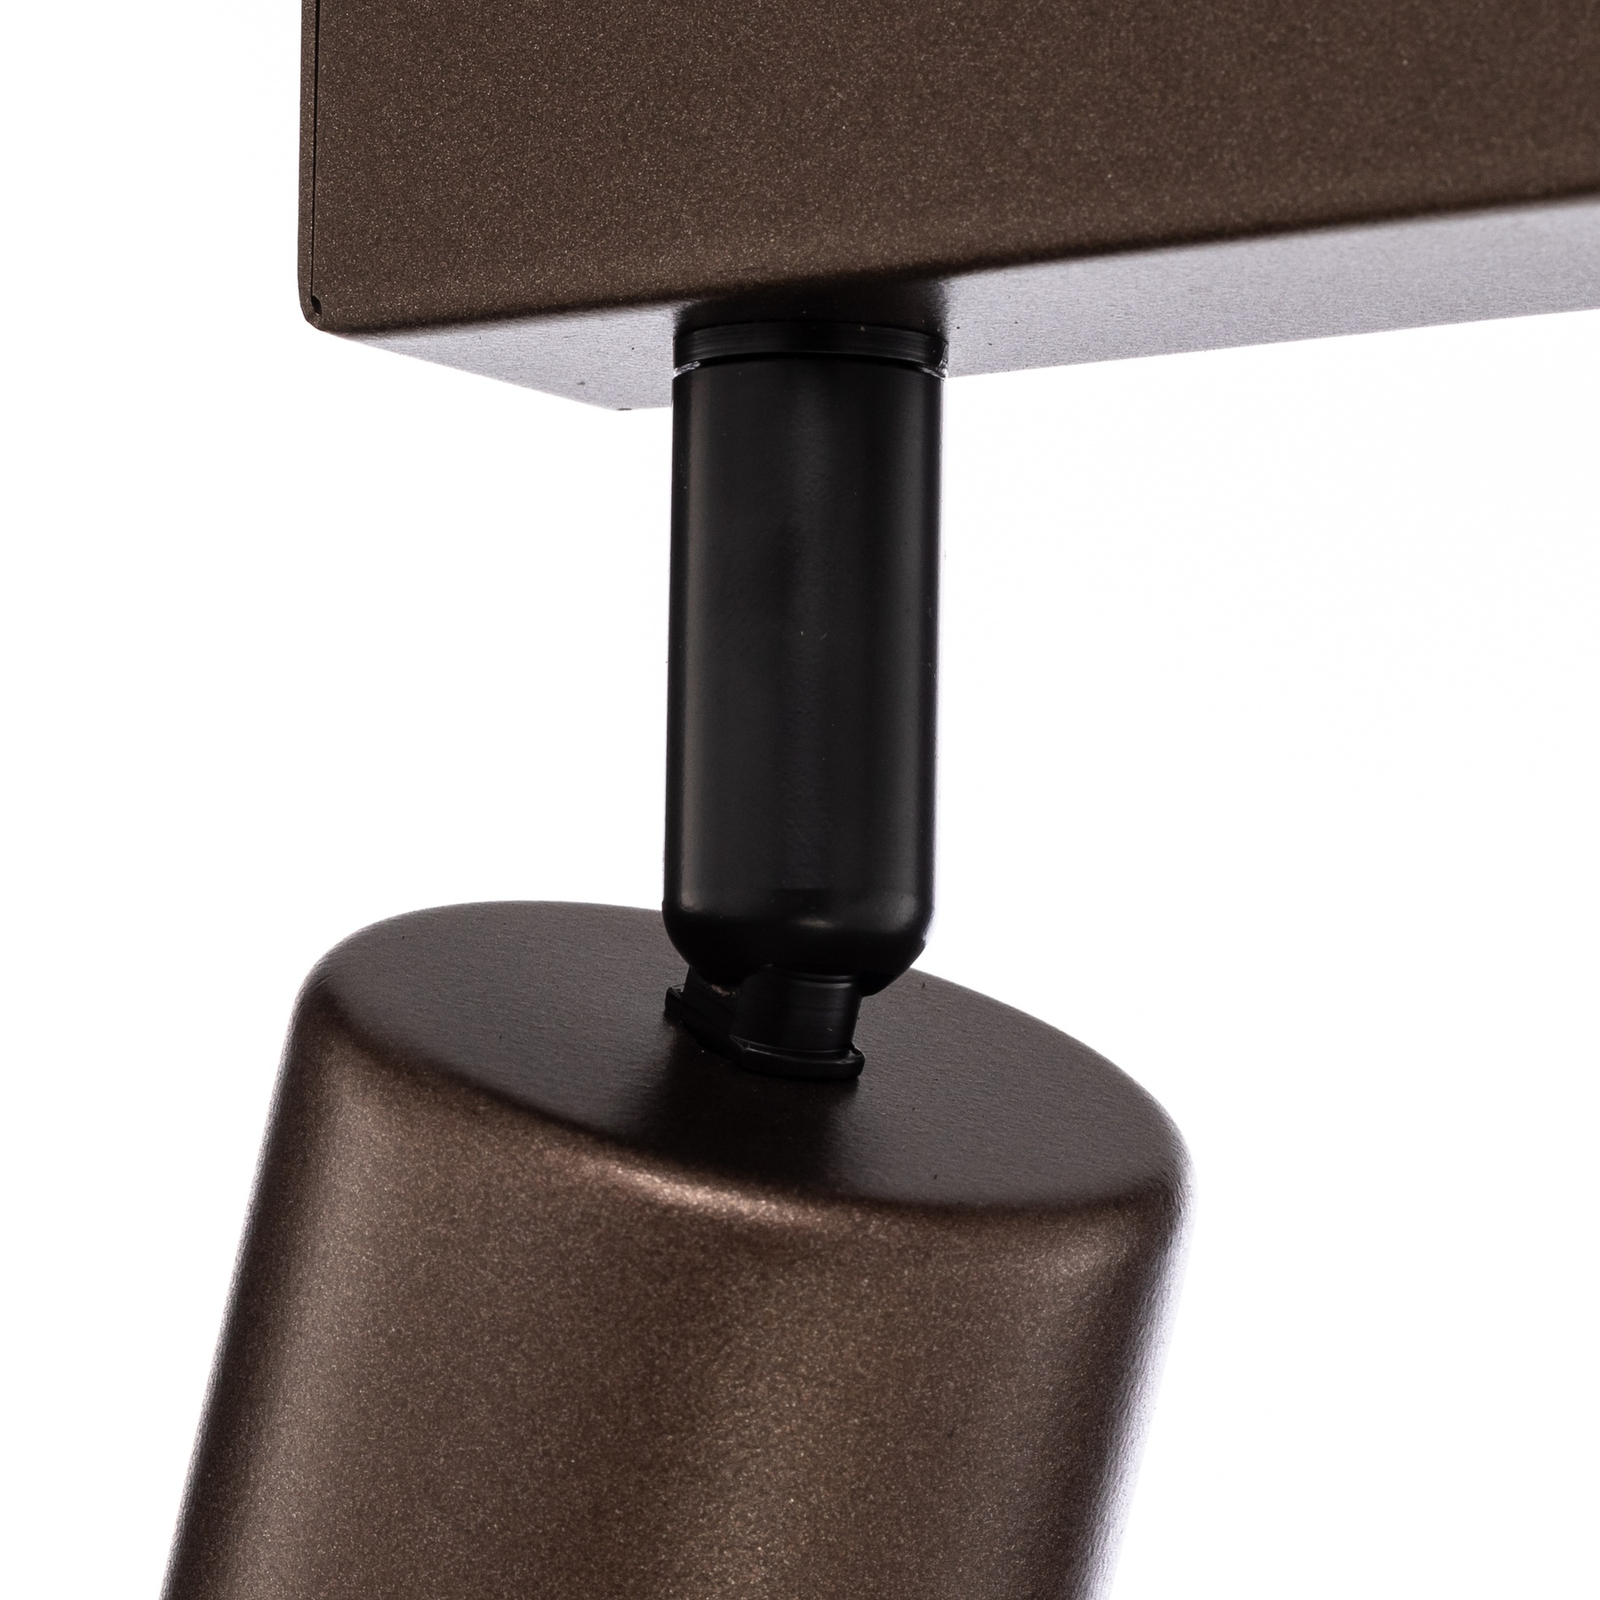 Top downlight, adjustable, brown, 2-bulb linear